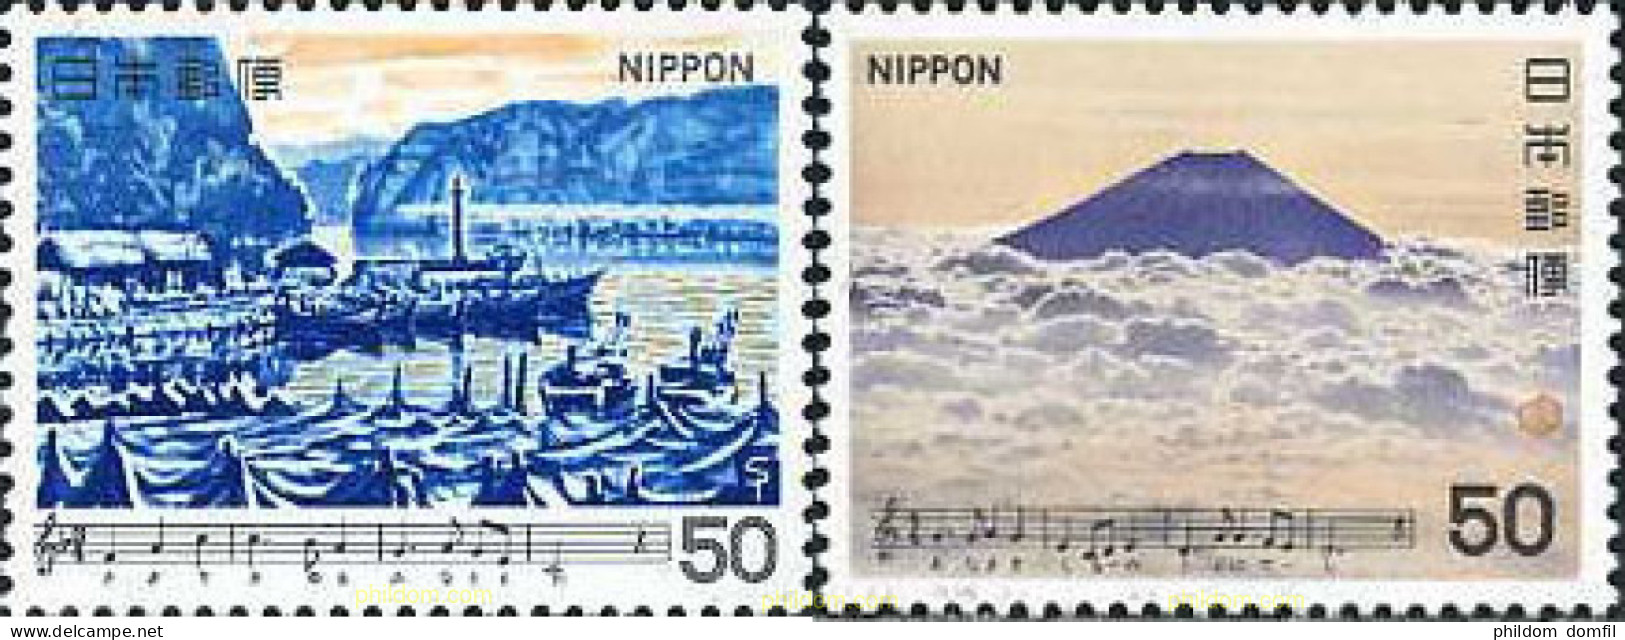 155083 MNH JAPON 1980 CANTOS JAPONESES - Nuovi